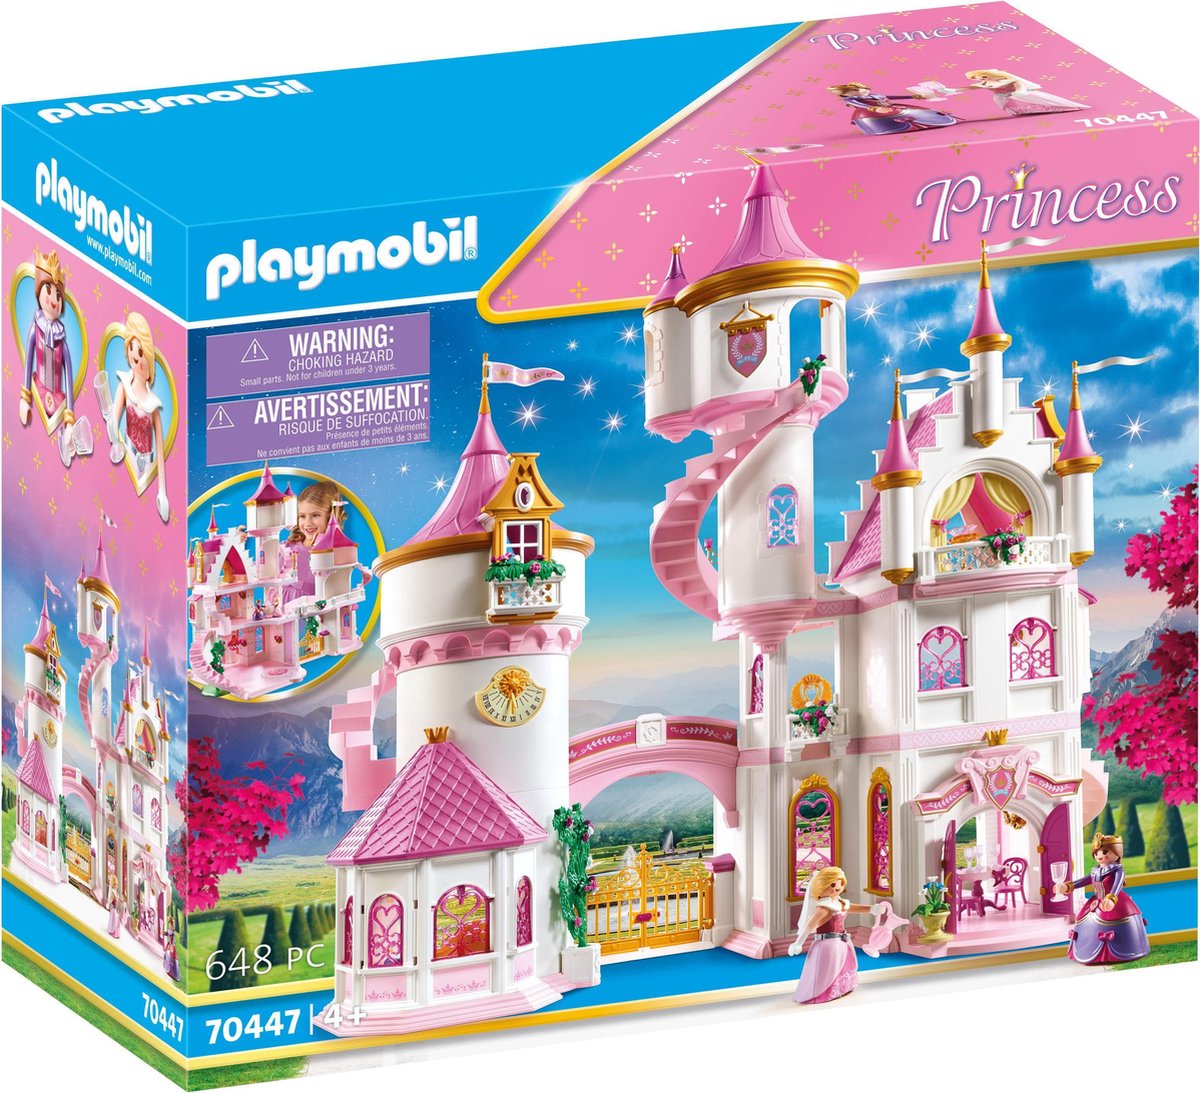 PLAYMOBIL Princess Groot Prinsessenkasteel - 70447 - PLAYMOBIL